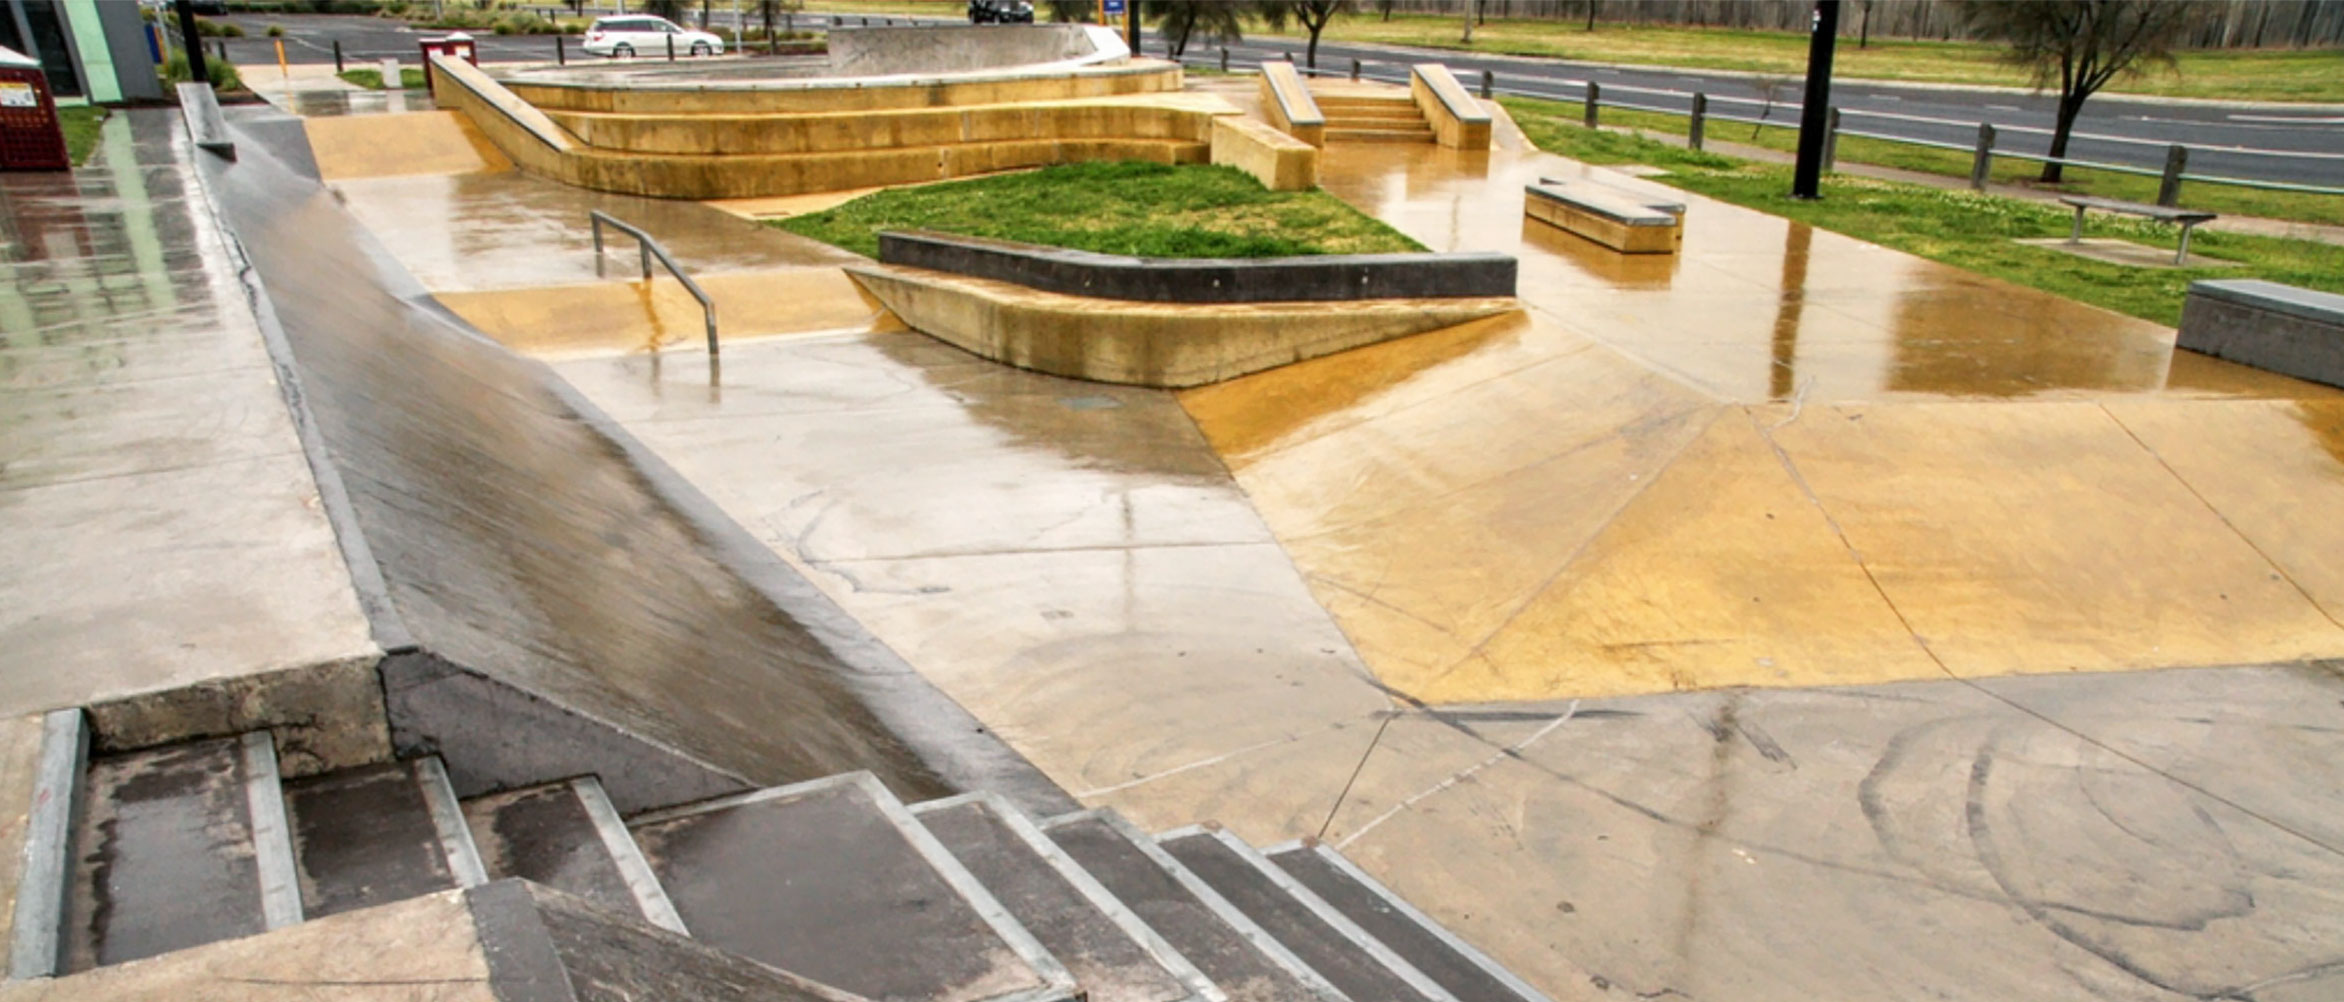 Taylors Hill skate park, street section, Concrete Skateparks